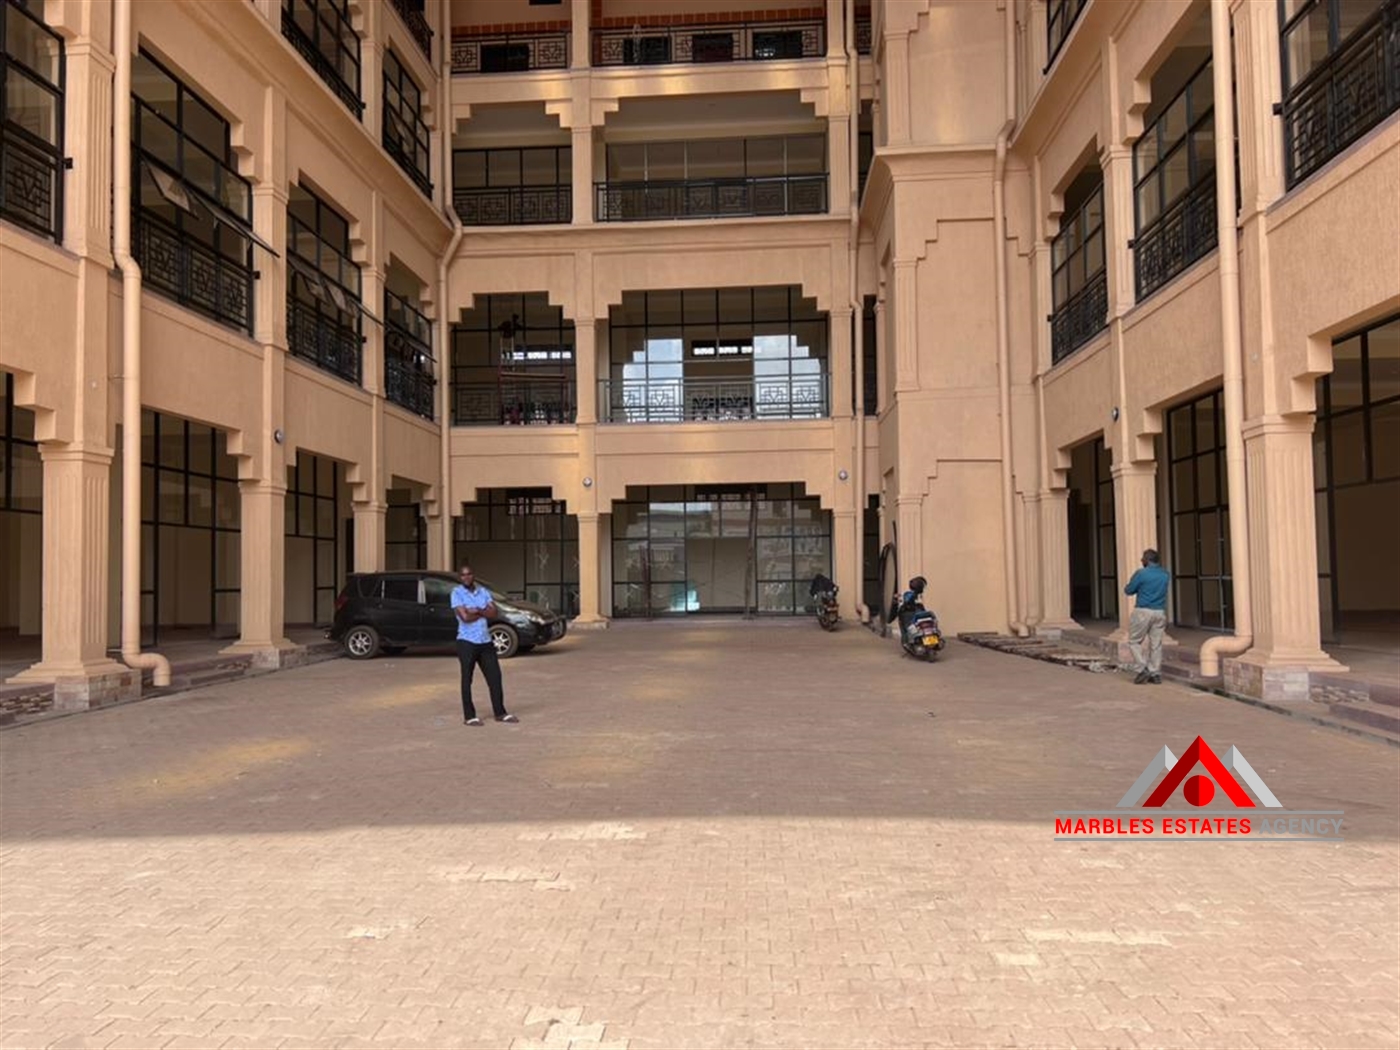 Warehouse for rent in Industrialarea Kampala